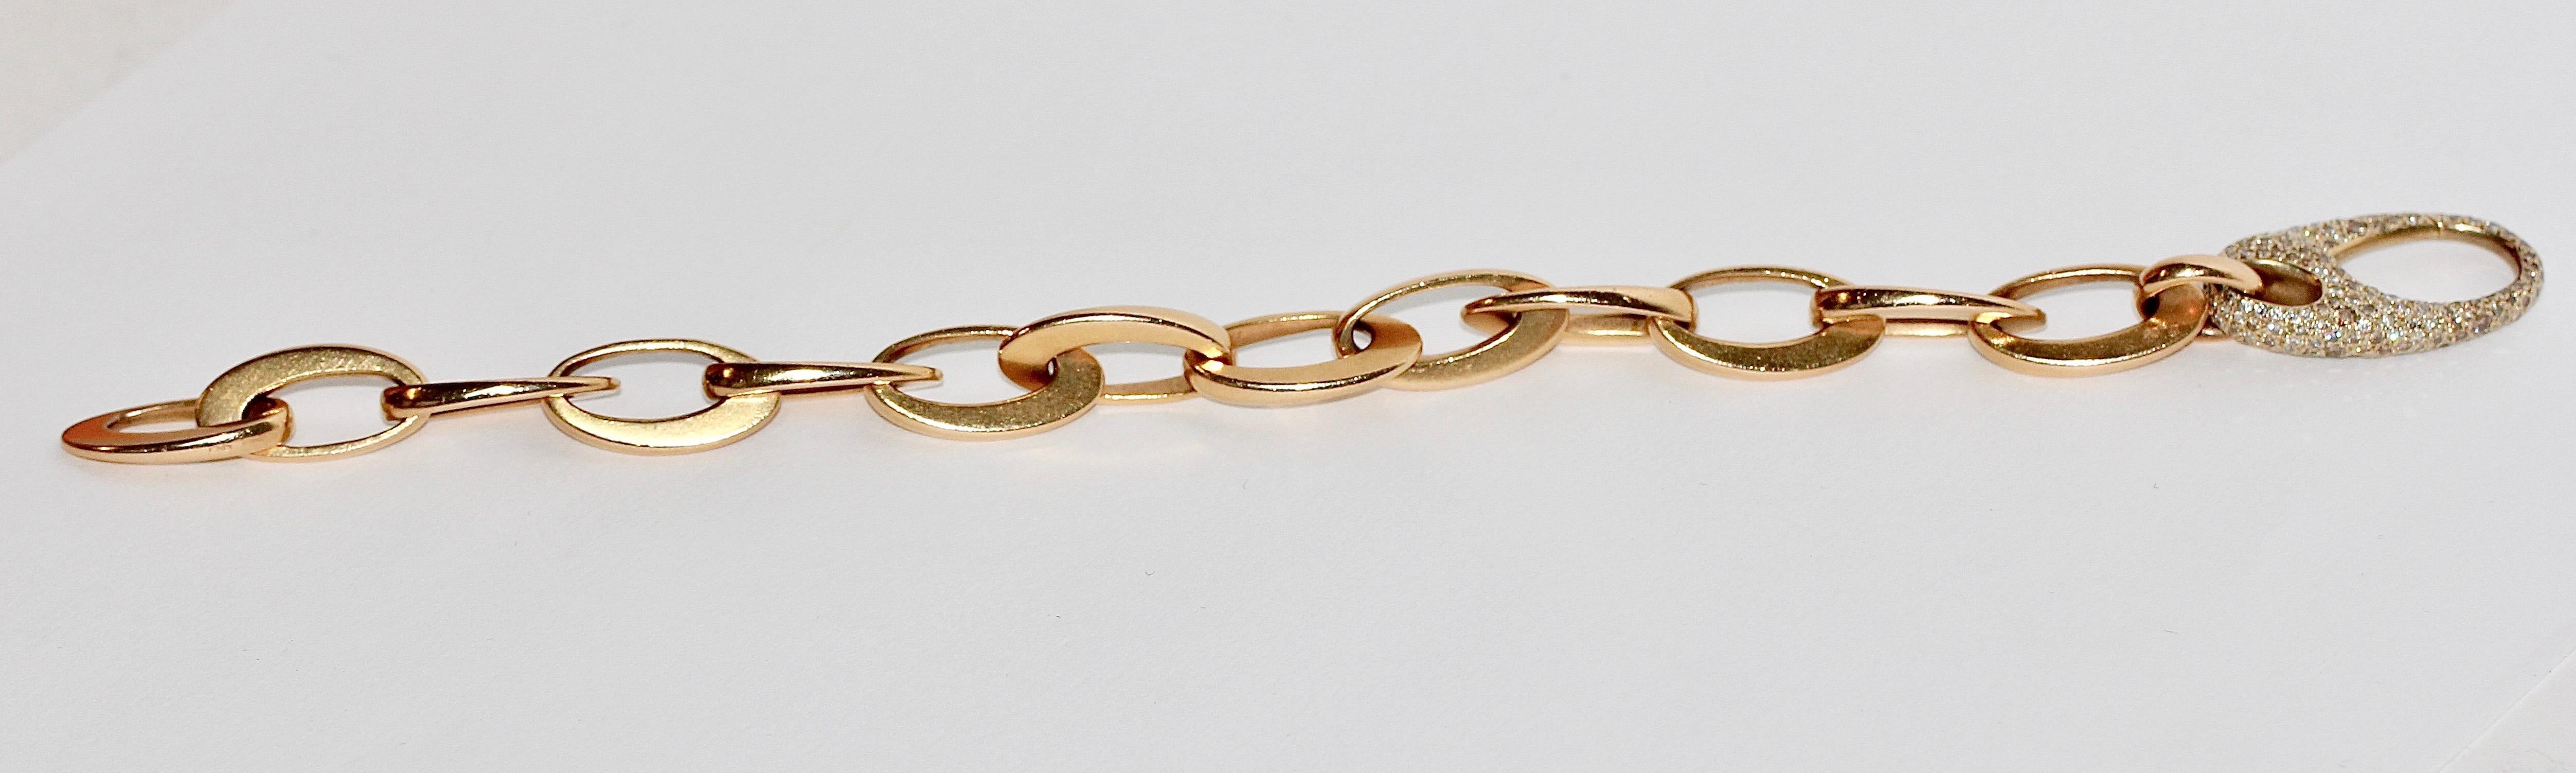 Women's Beautiful Designer Chain Bracelet Made by Pomellato, 18 Karat Gold with Diamonds